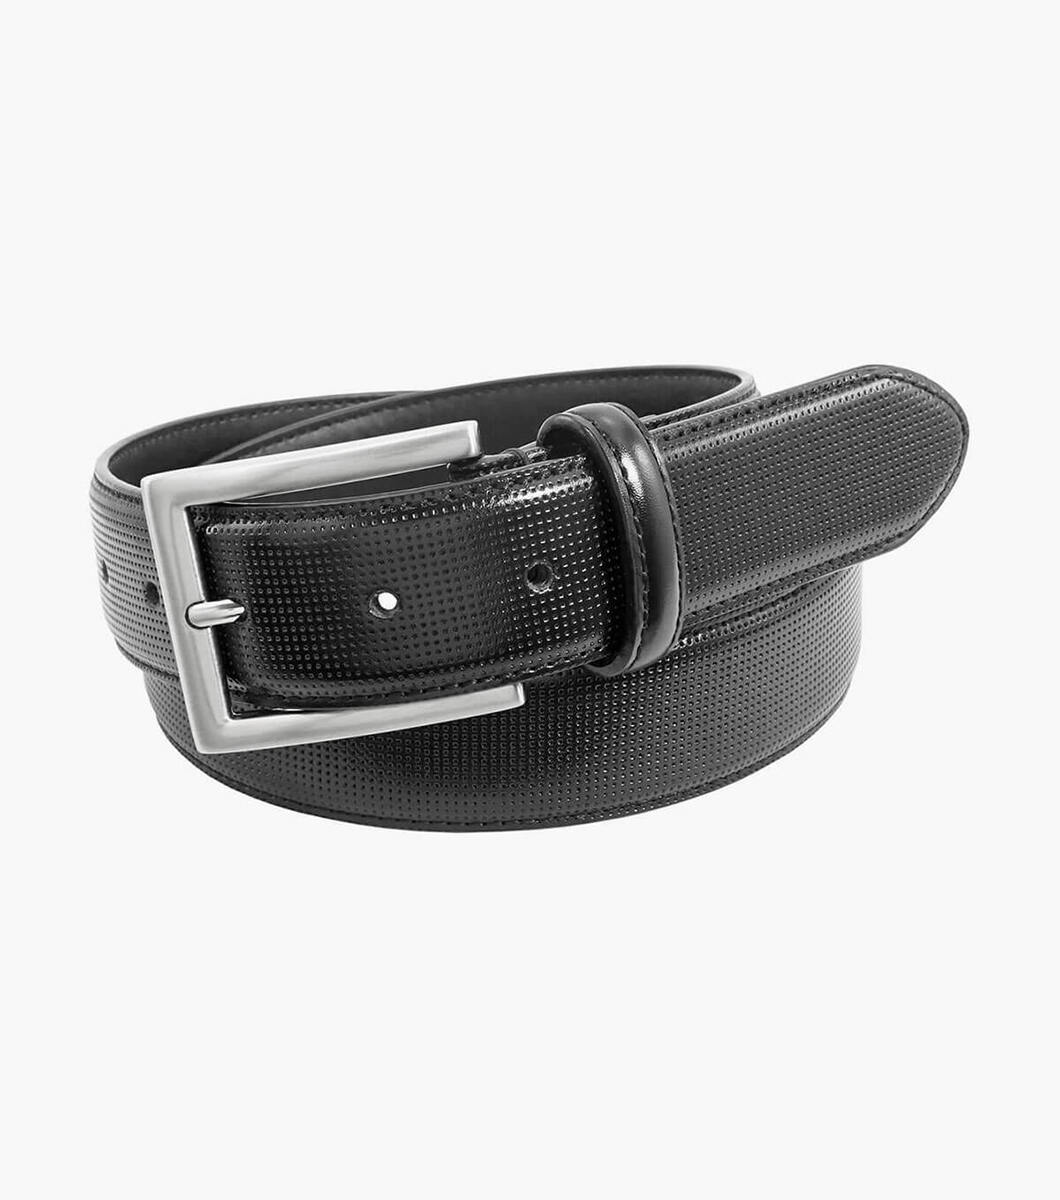 Florsheim Mens Sinclair 33mm Dress Casual Leather Belt 